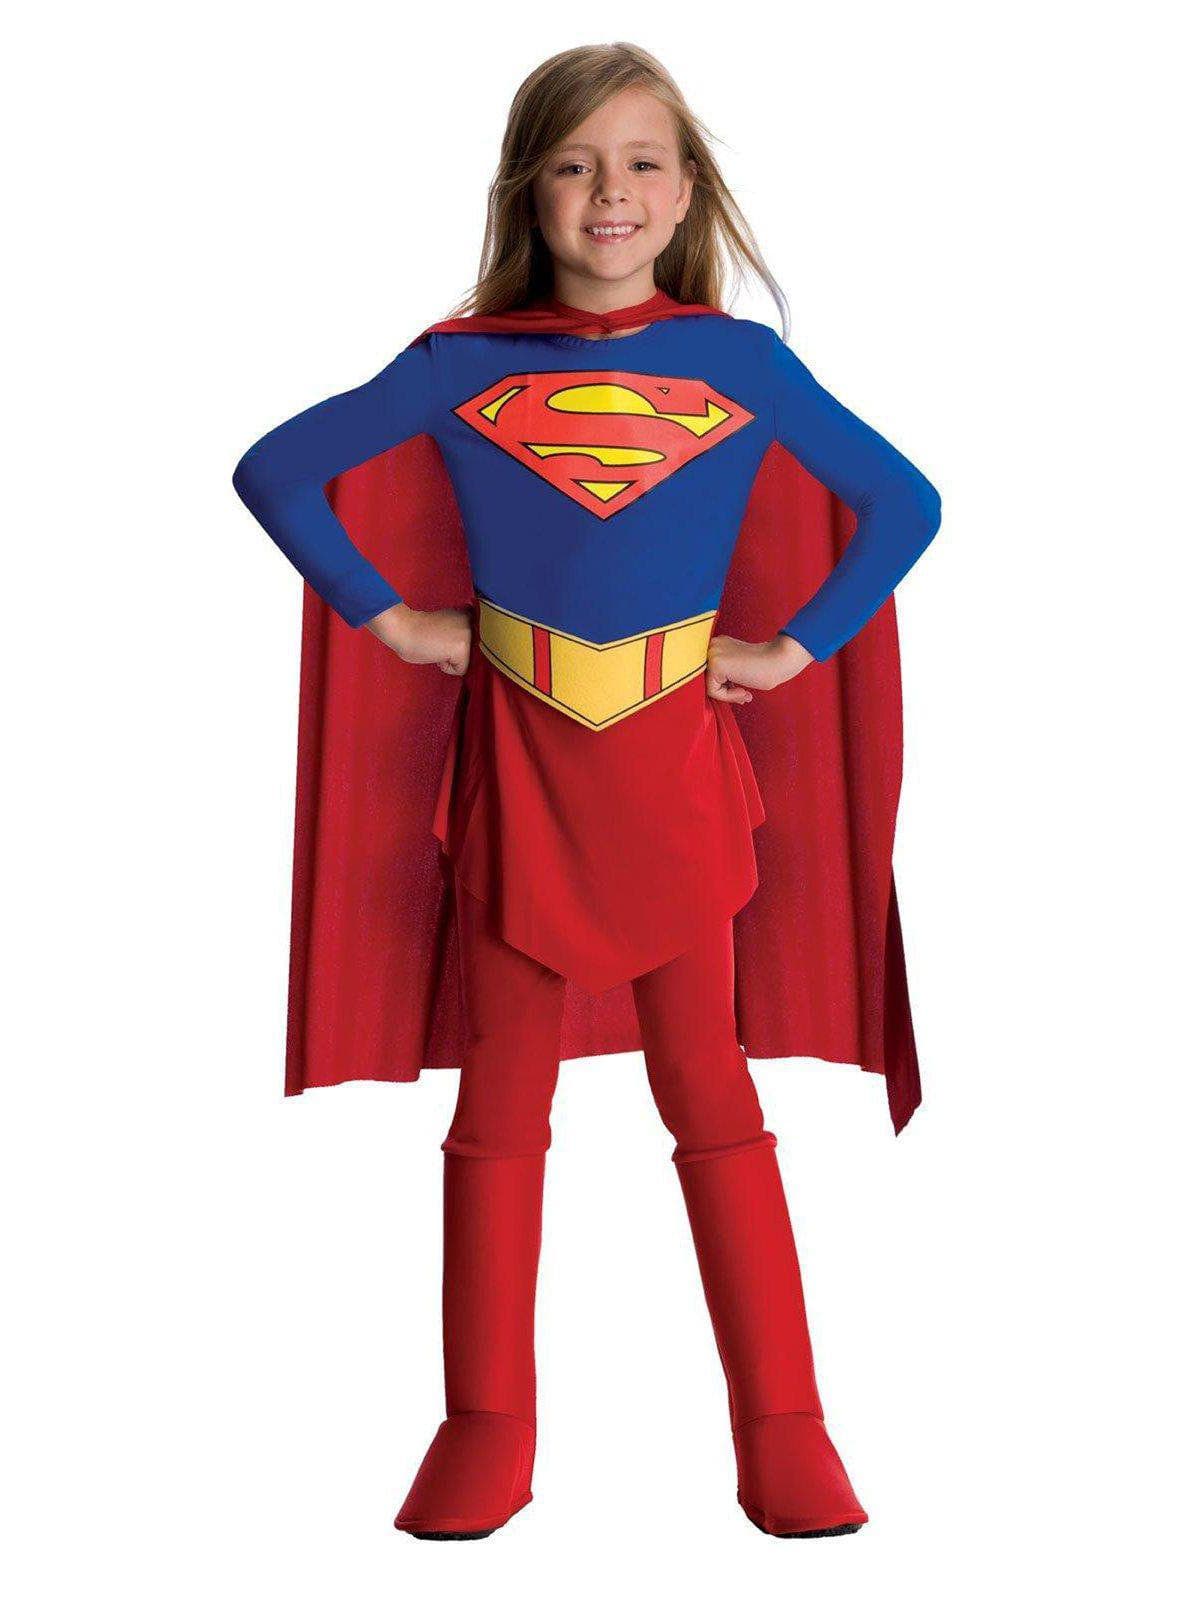 Kid's DC Comics Supergirl Costume - costumes.com